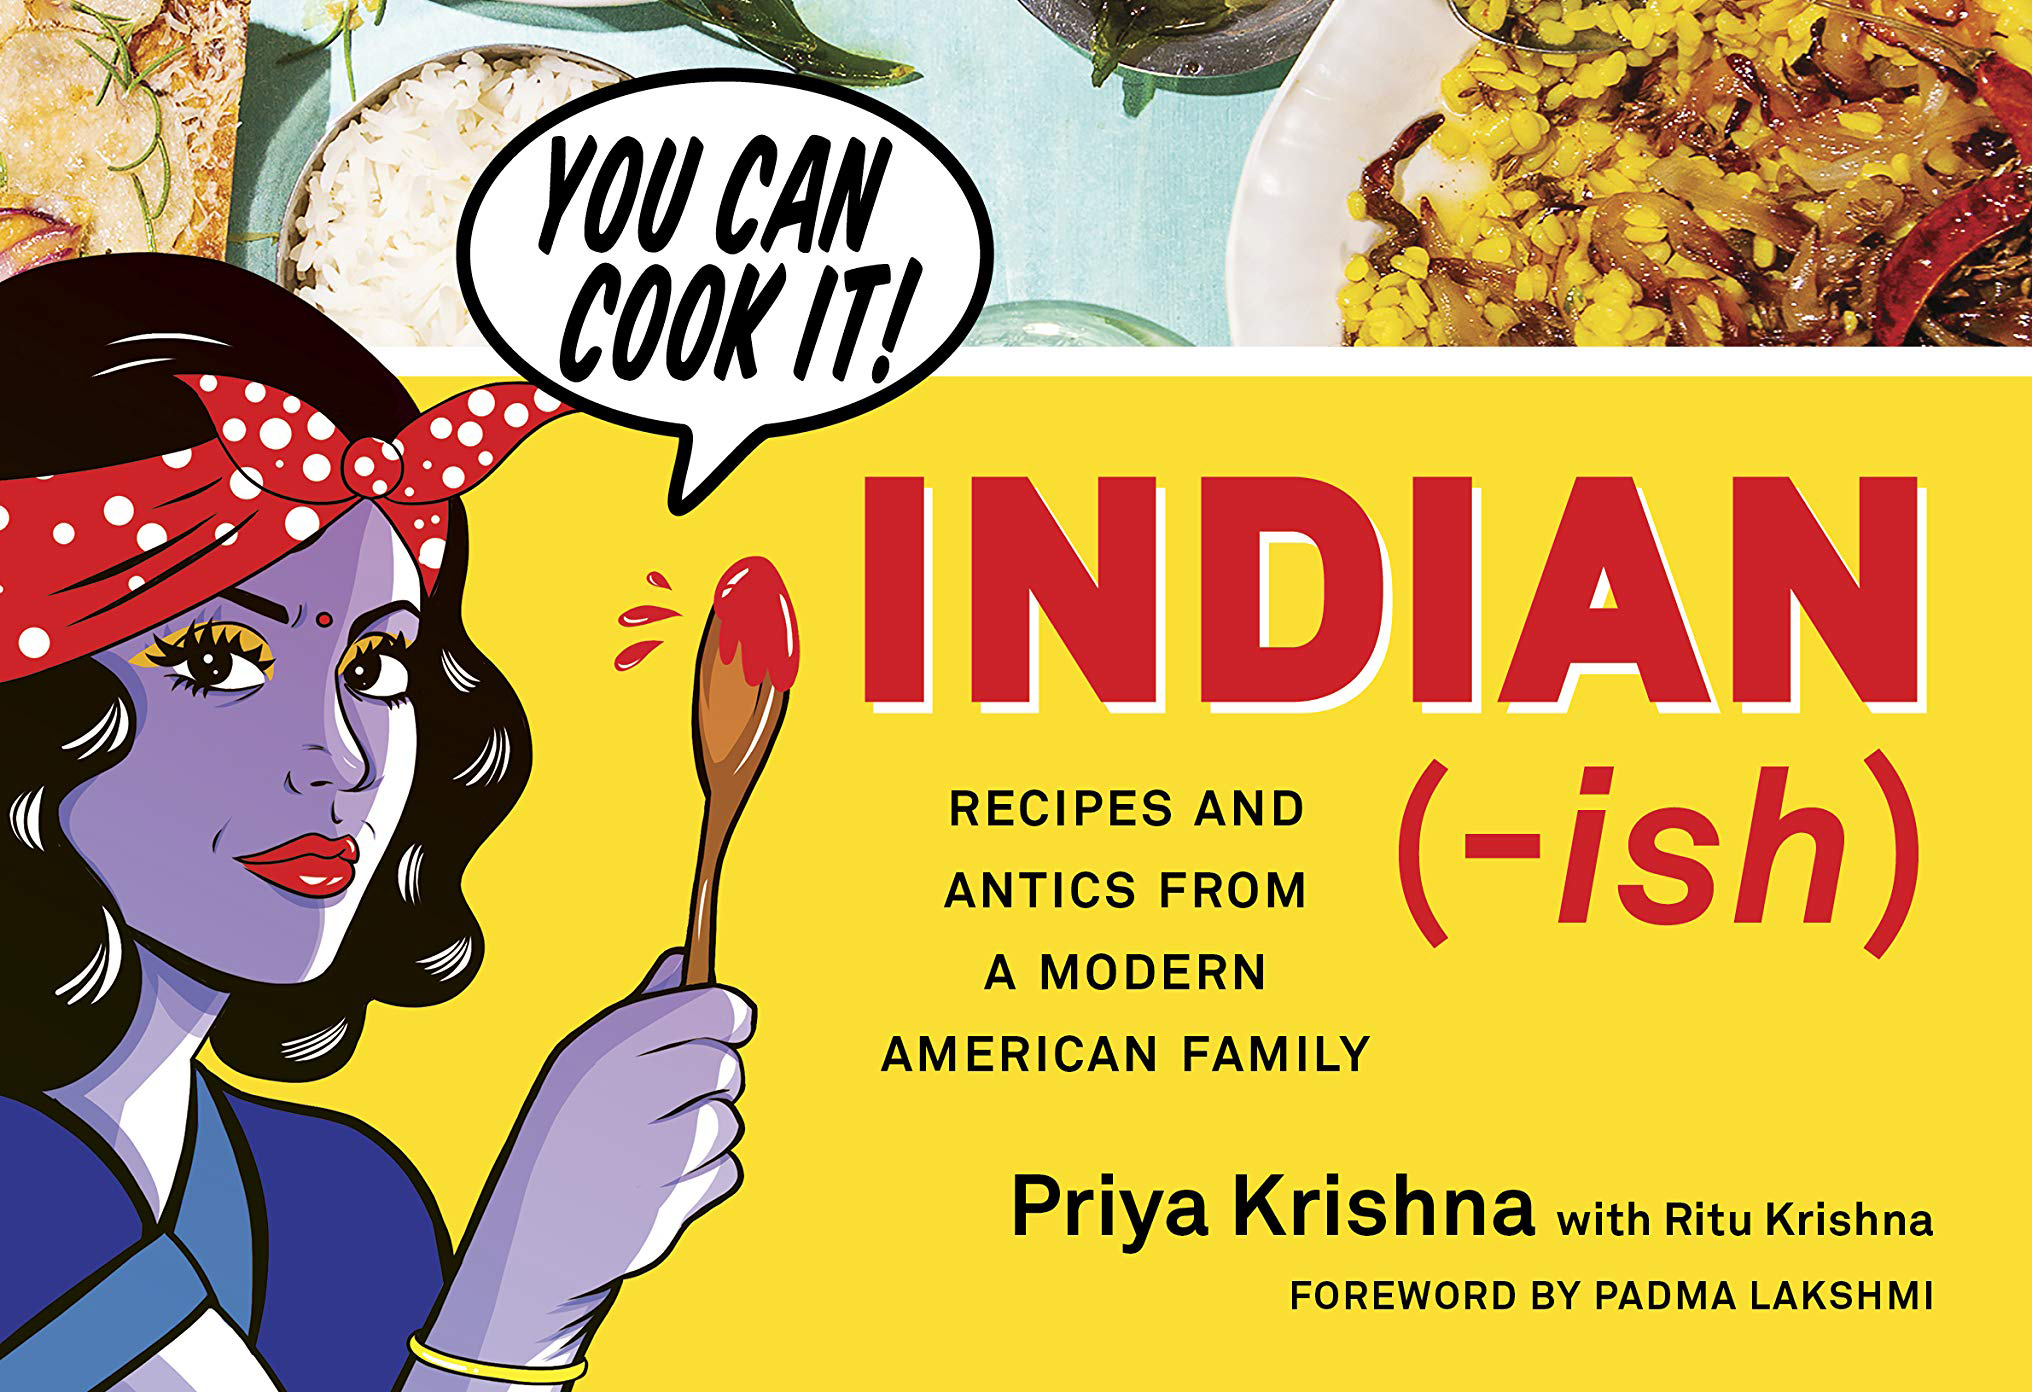 Indian-ish by Priya Krishna